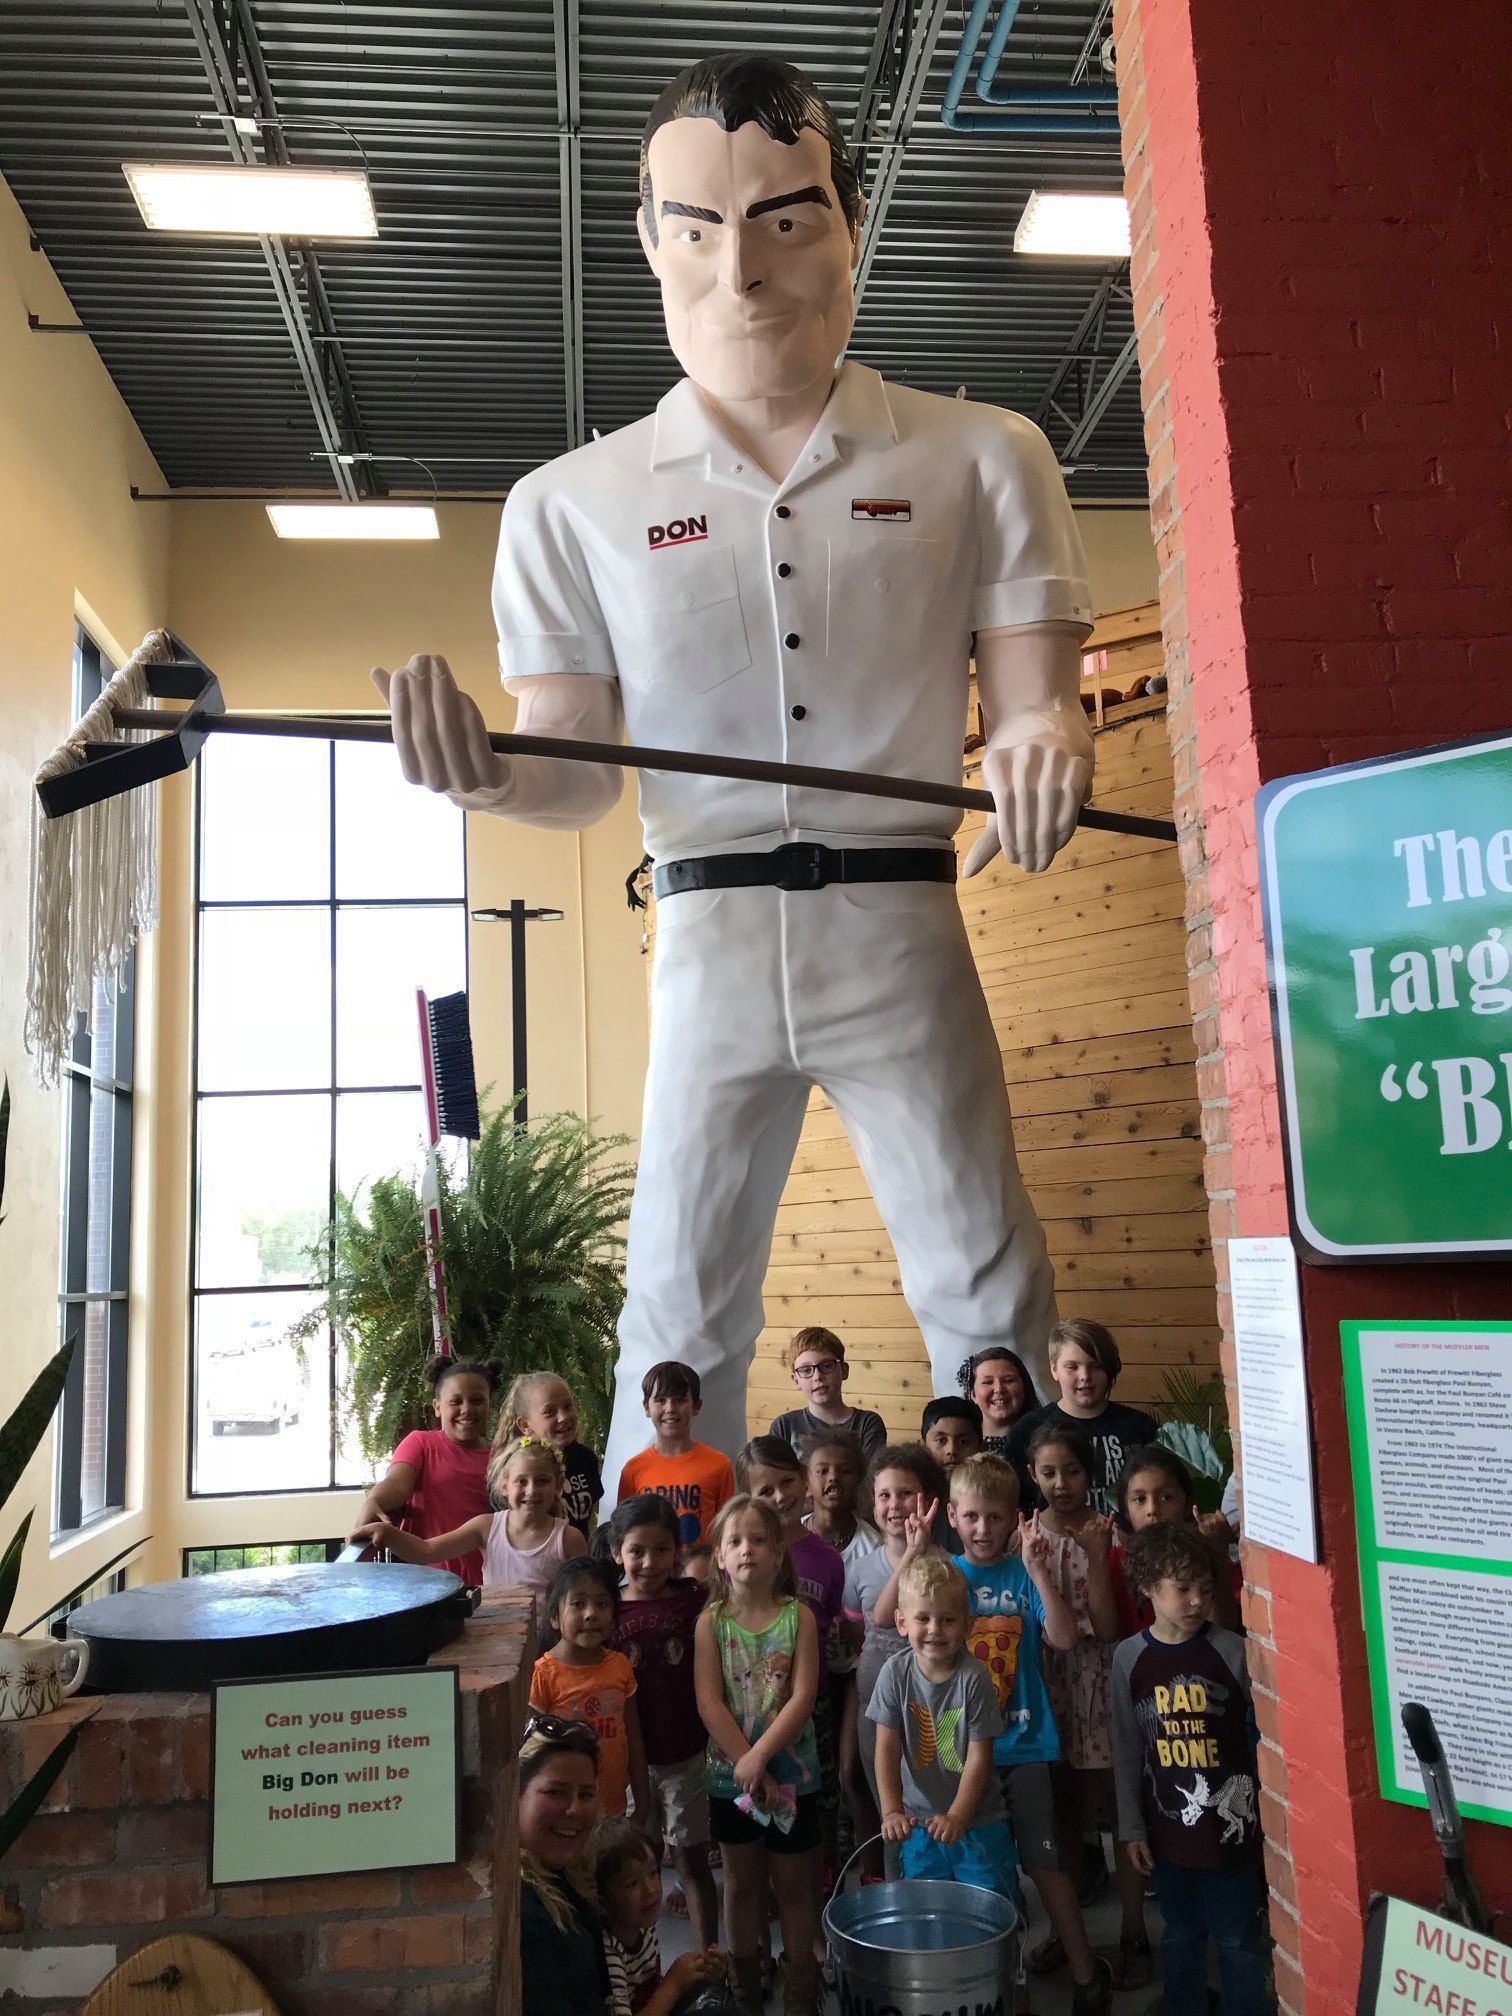 World's Largest Janitor Statue, world record in Pocatello, Idaho